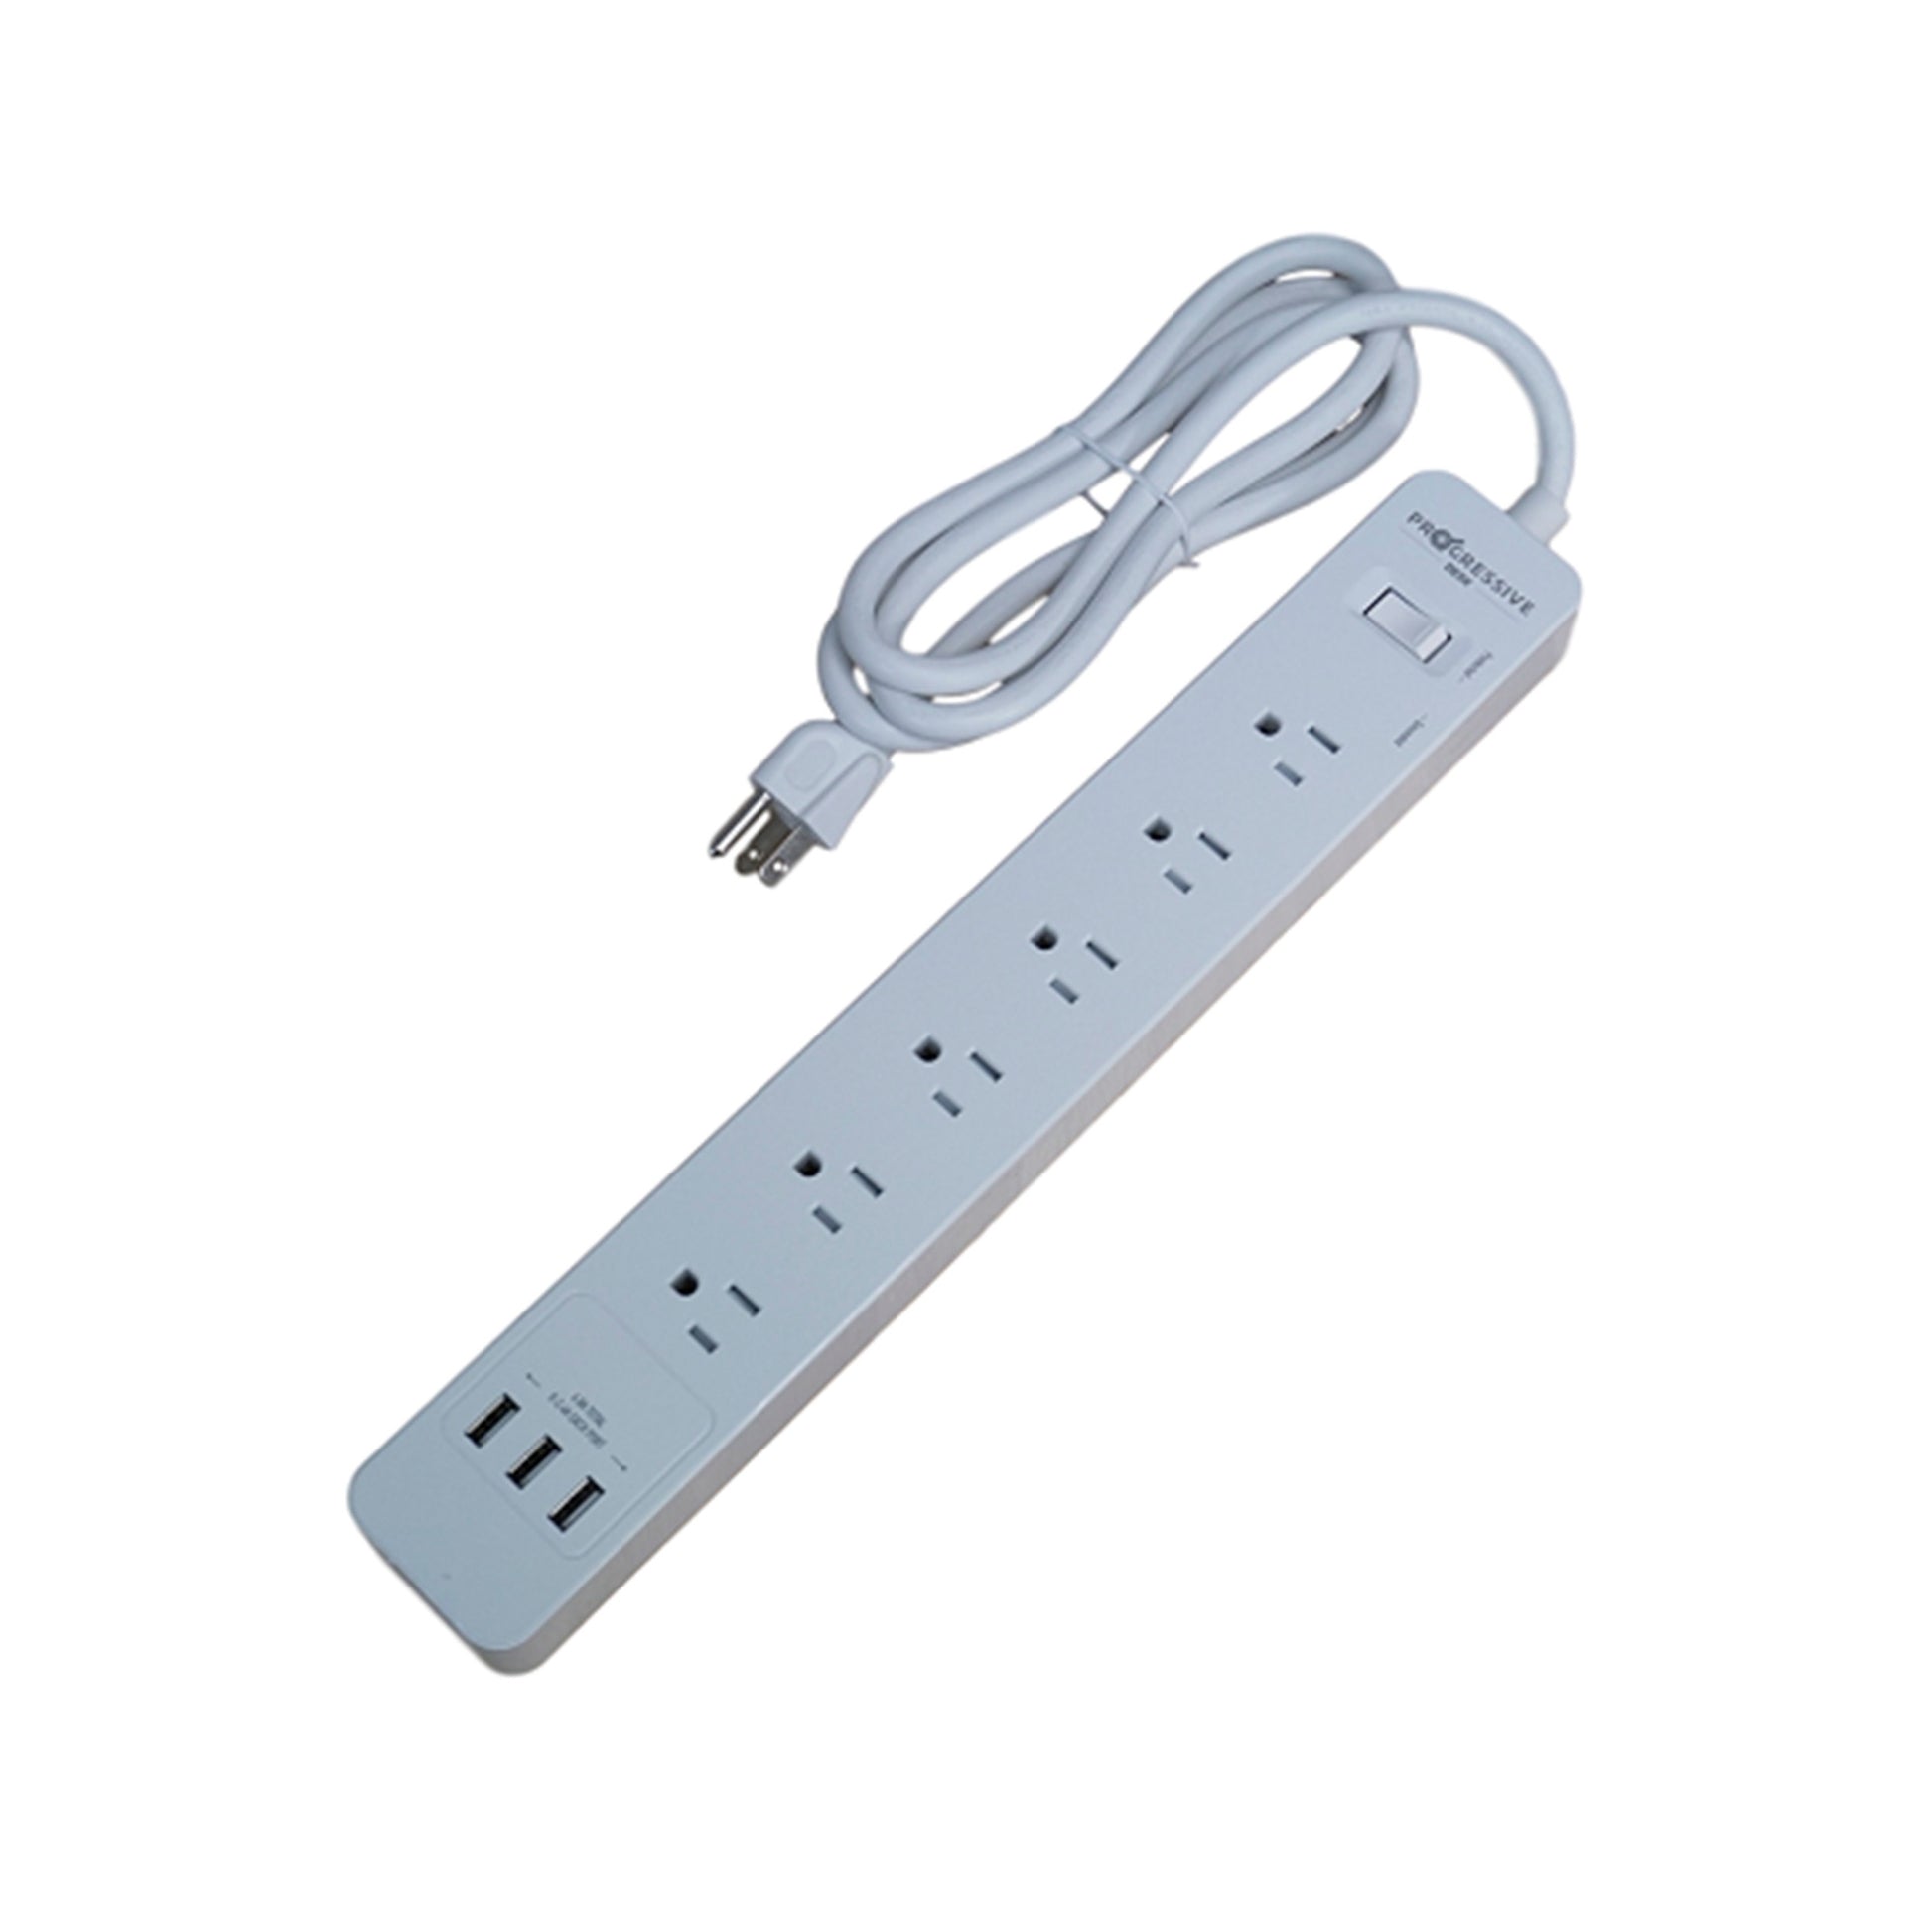 6 Plug Power Bar w/ USB Ports and Under Desk Mounting #2